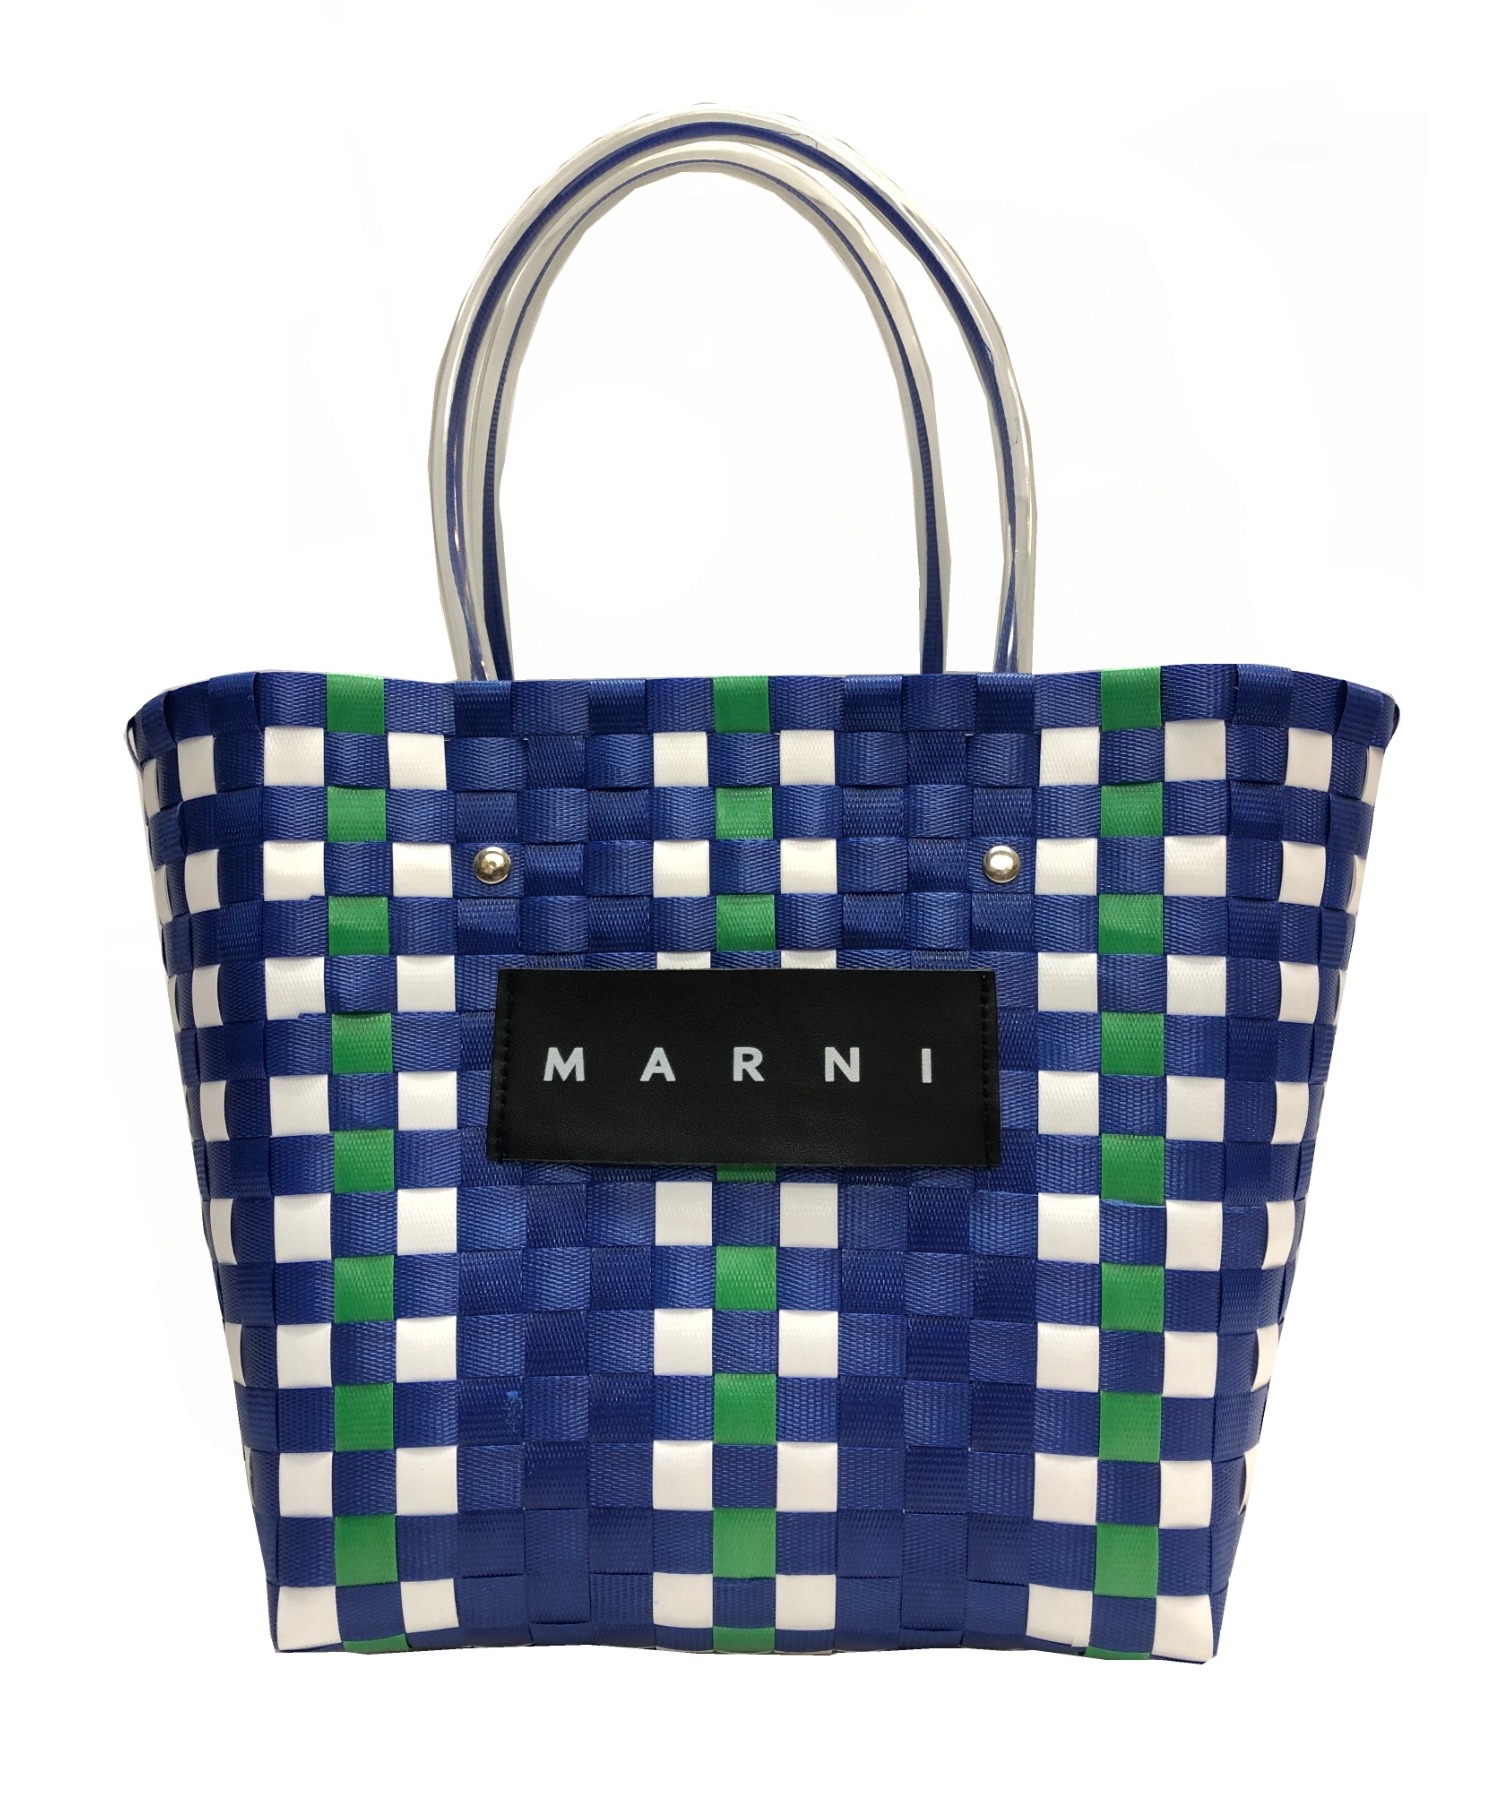 MARNI (マルニ) フラワーカフェピクニックバッグ ブルー サイズ:下記参照 FLOWER CAFE PICNIC BAG